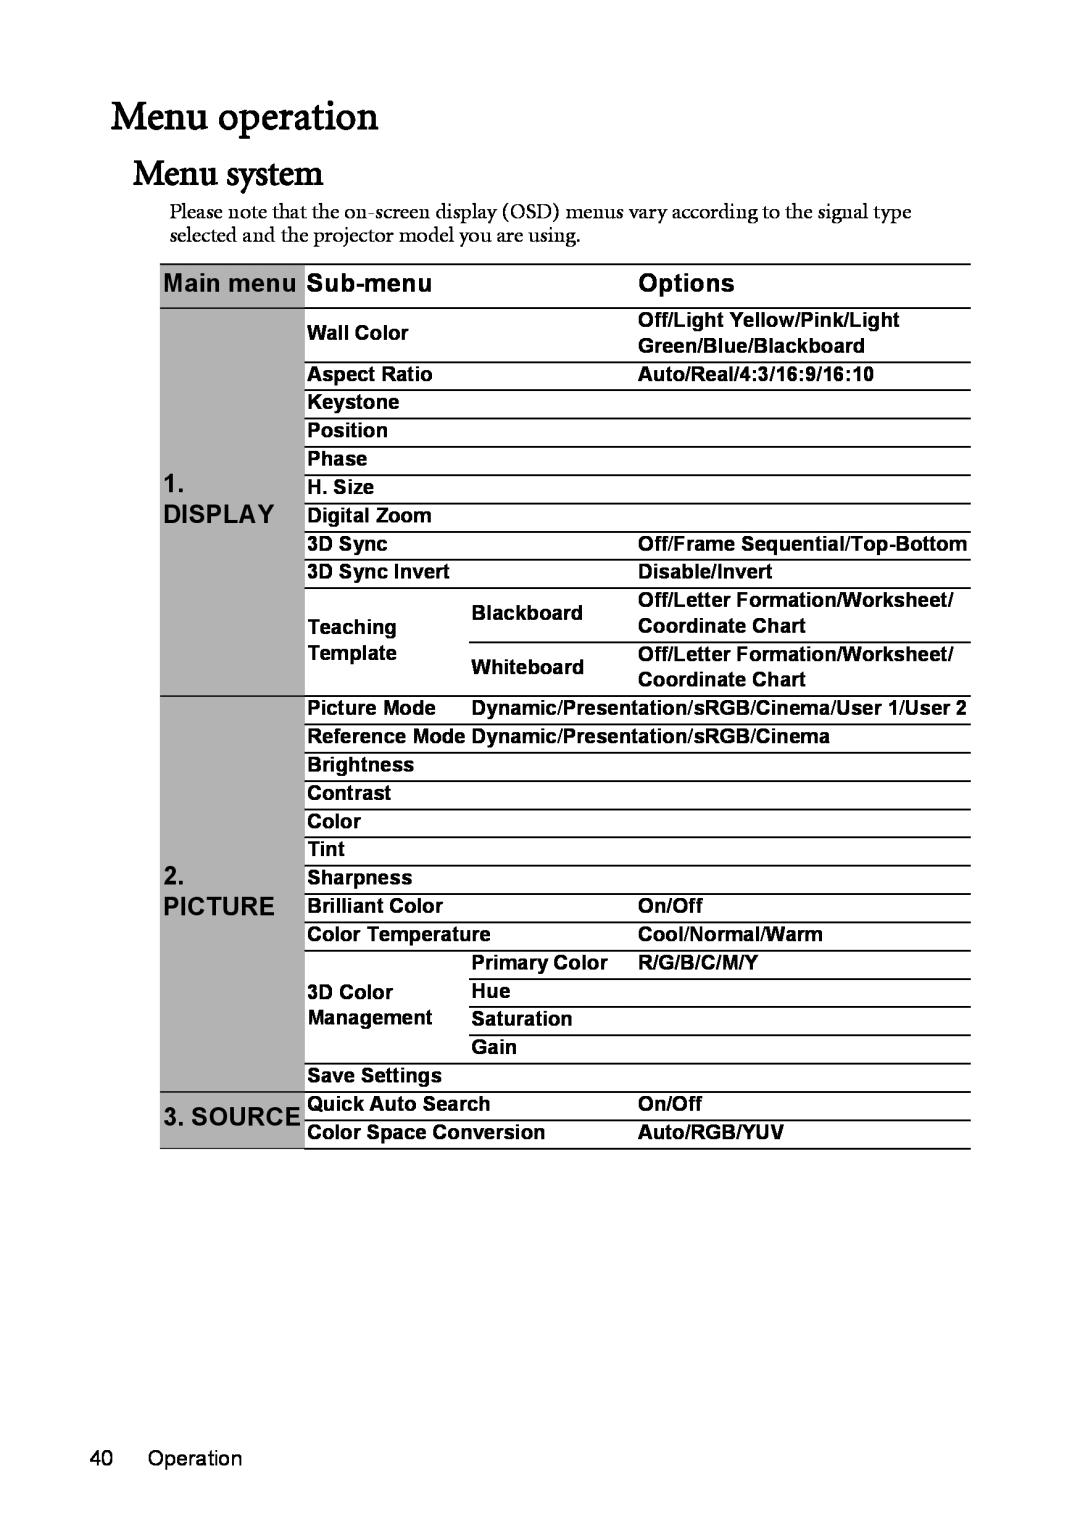 BenQ mw814st user manual Menu operation, Menu system 